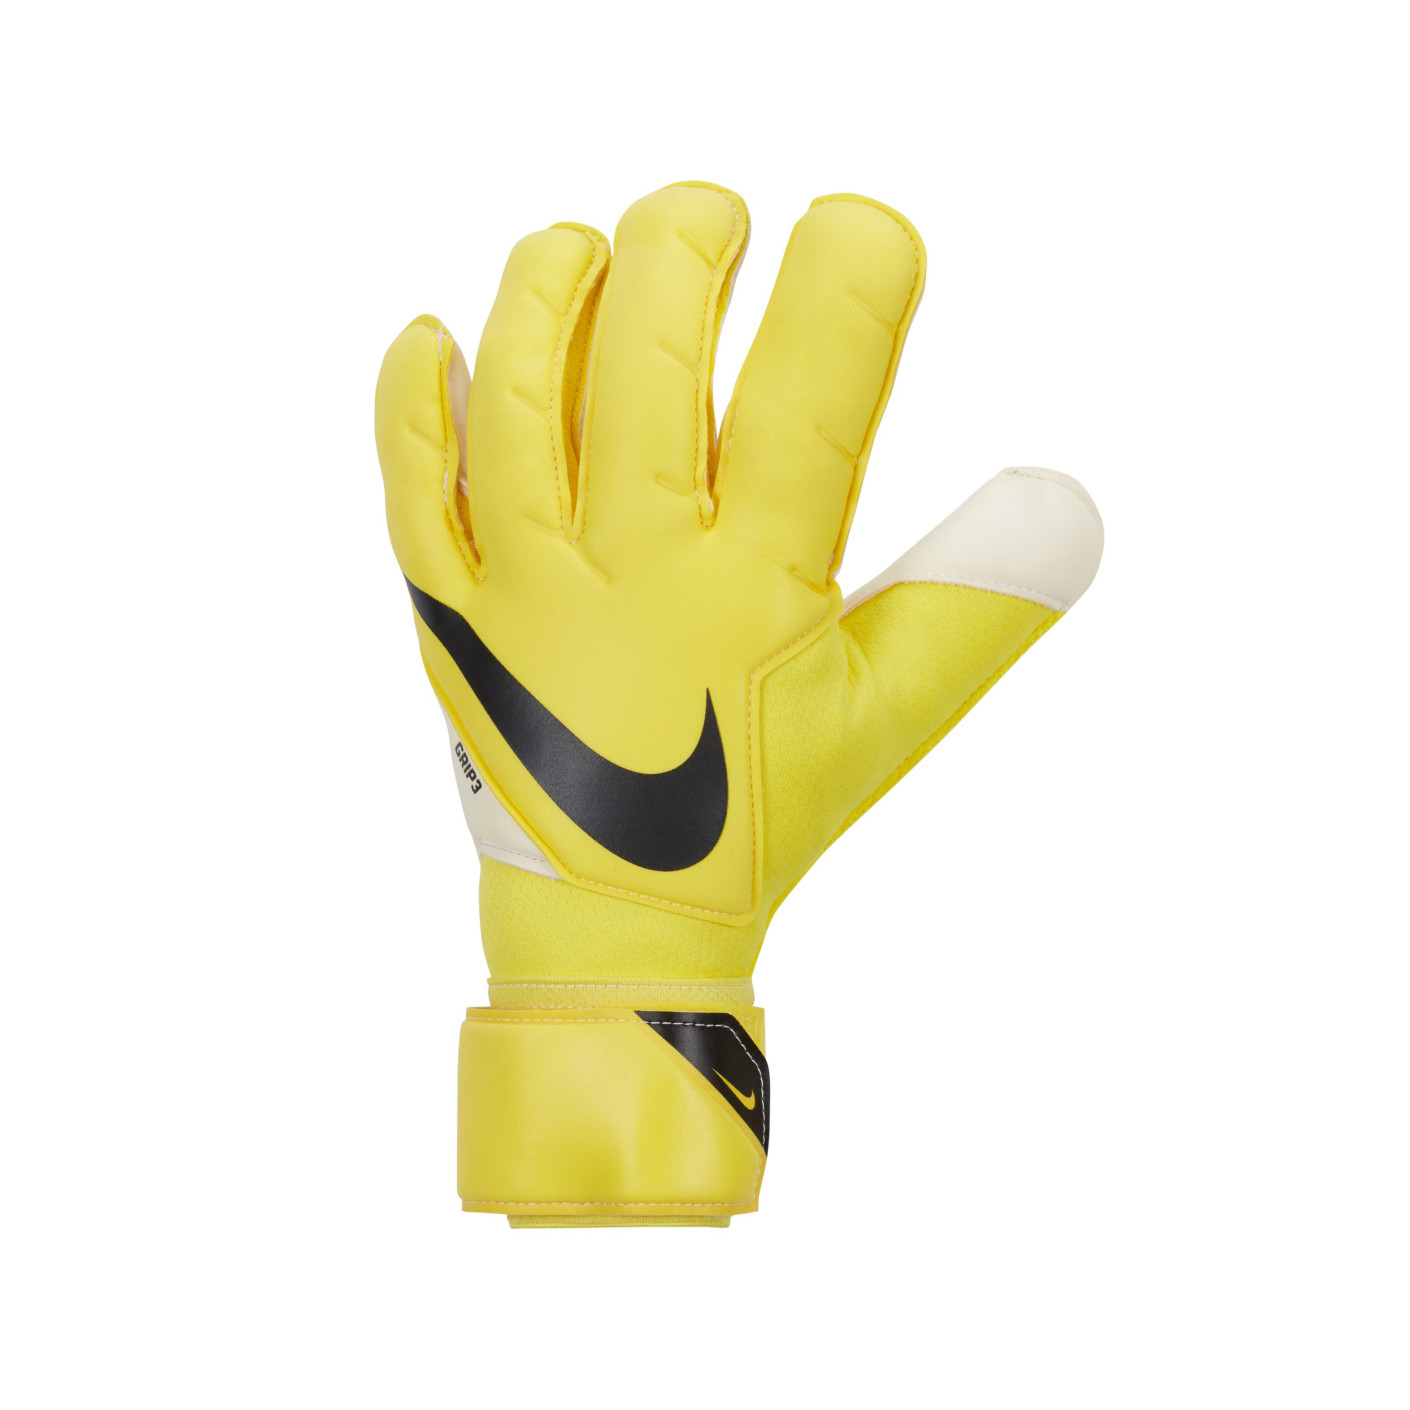 Gants de gardien de but Nike Grip 3 jaune blanc noir